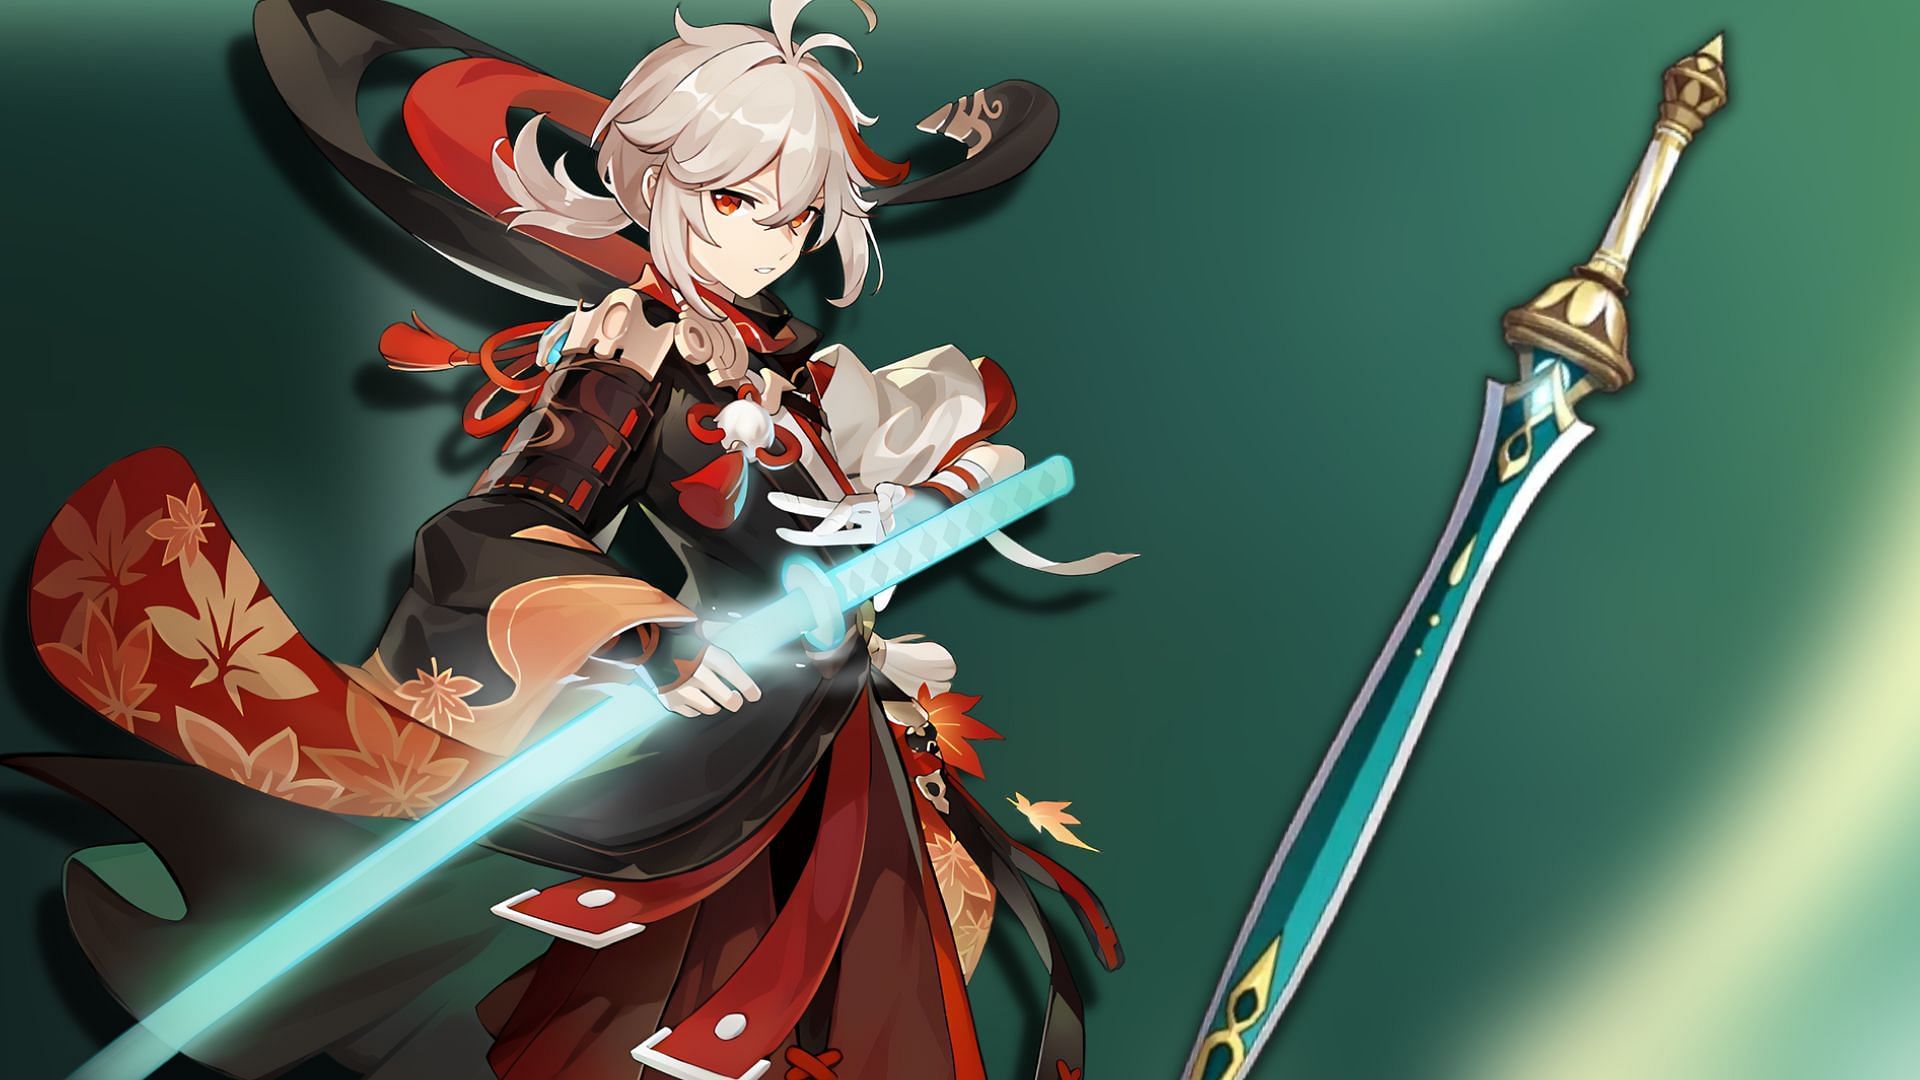 Genshin Impact 3.1 to introduce new 4-star sword for Kazuha